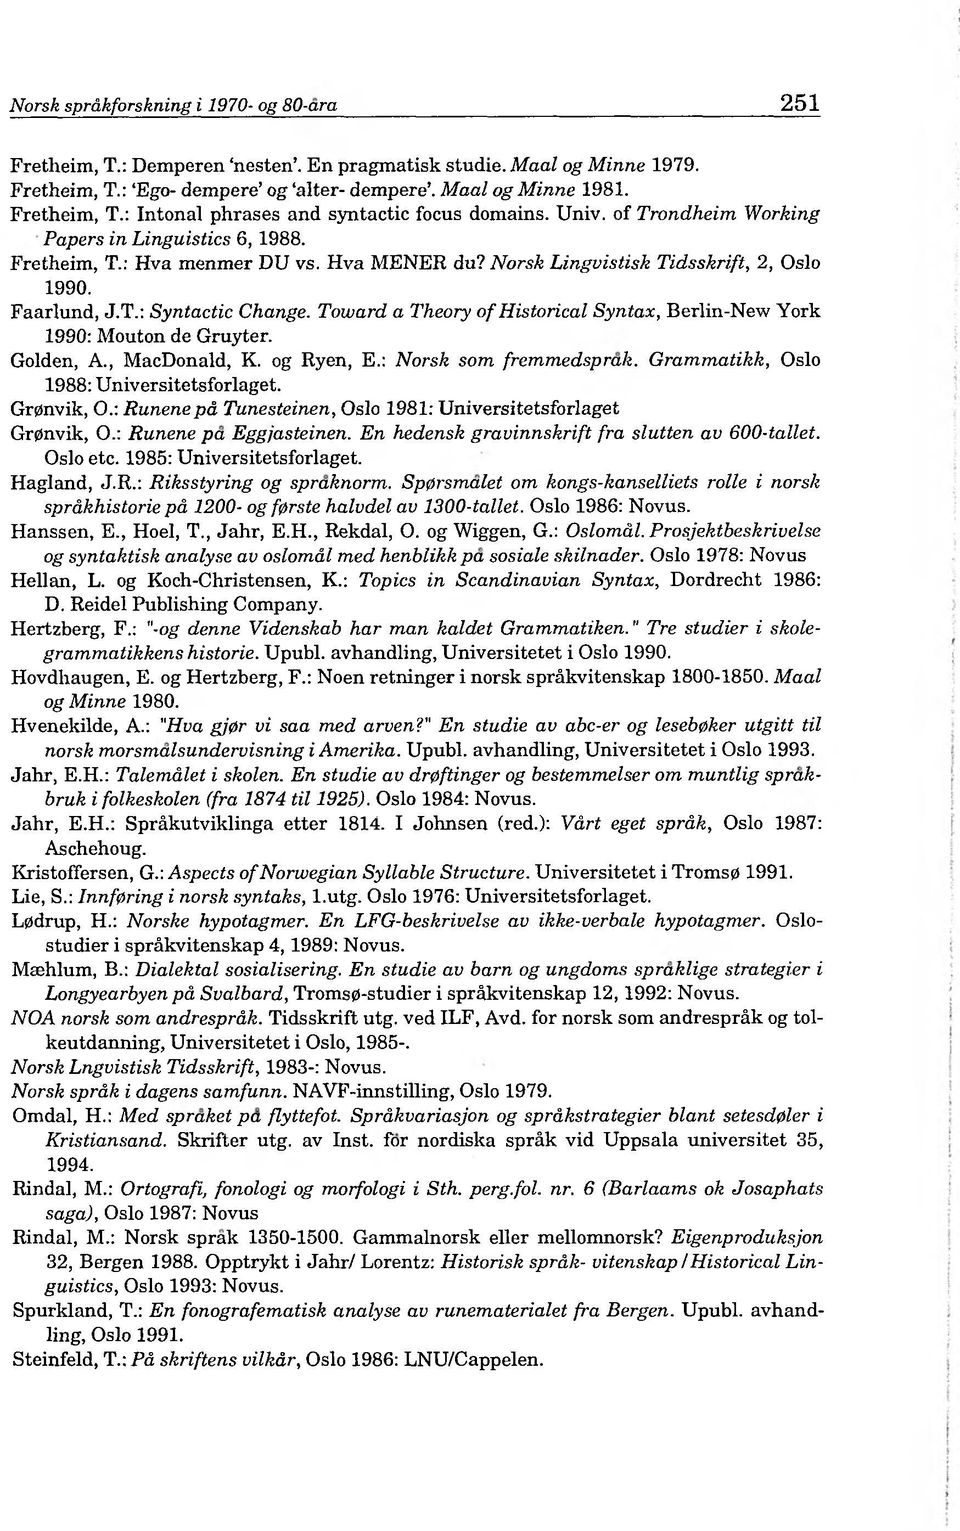 Toward a Theory o f Historical Syntax, Berlin-New York 1990: Mouton de Gruyter. Golden, A., MacDonald, K. og Ryen, E.: Norsk som fremmedsprak. Grammatikk, Oslo 1988: Universitetsforlaget. Gr0nvik, O.